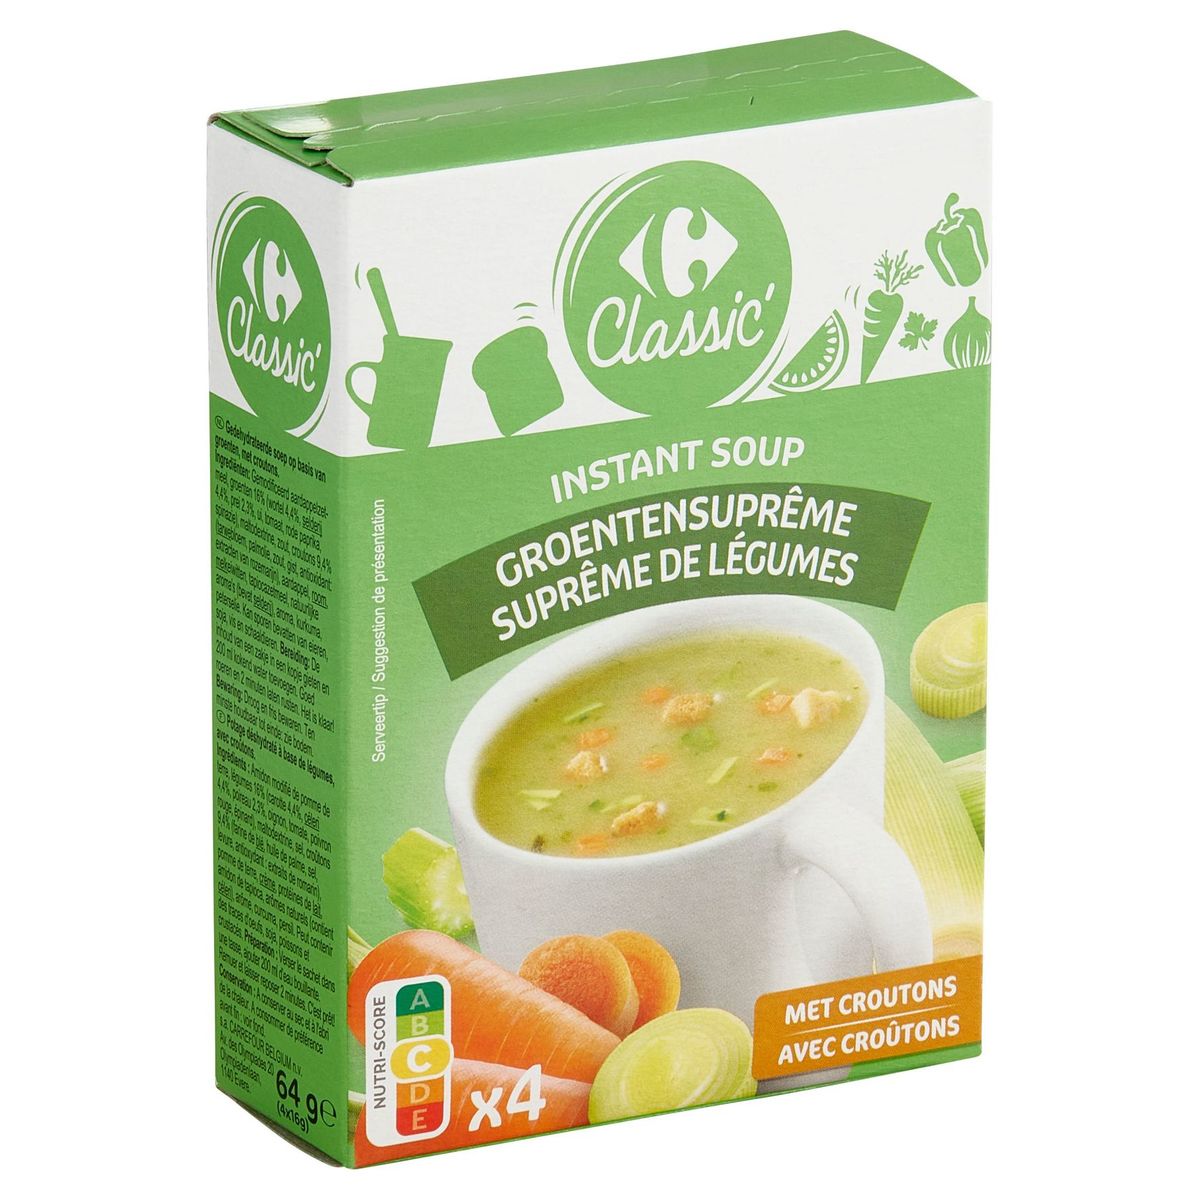 Carrefour Classic' Instant Soup Groentensuprême 4 x 16 g